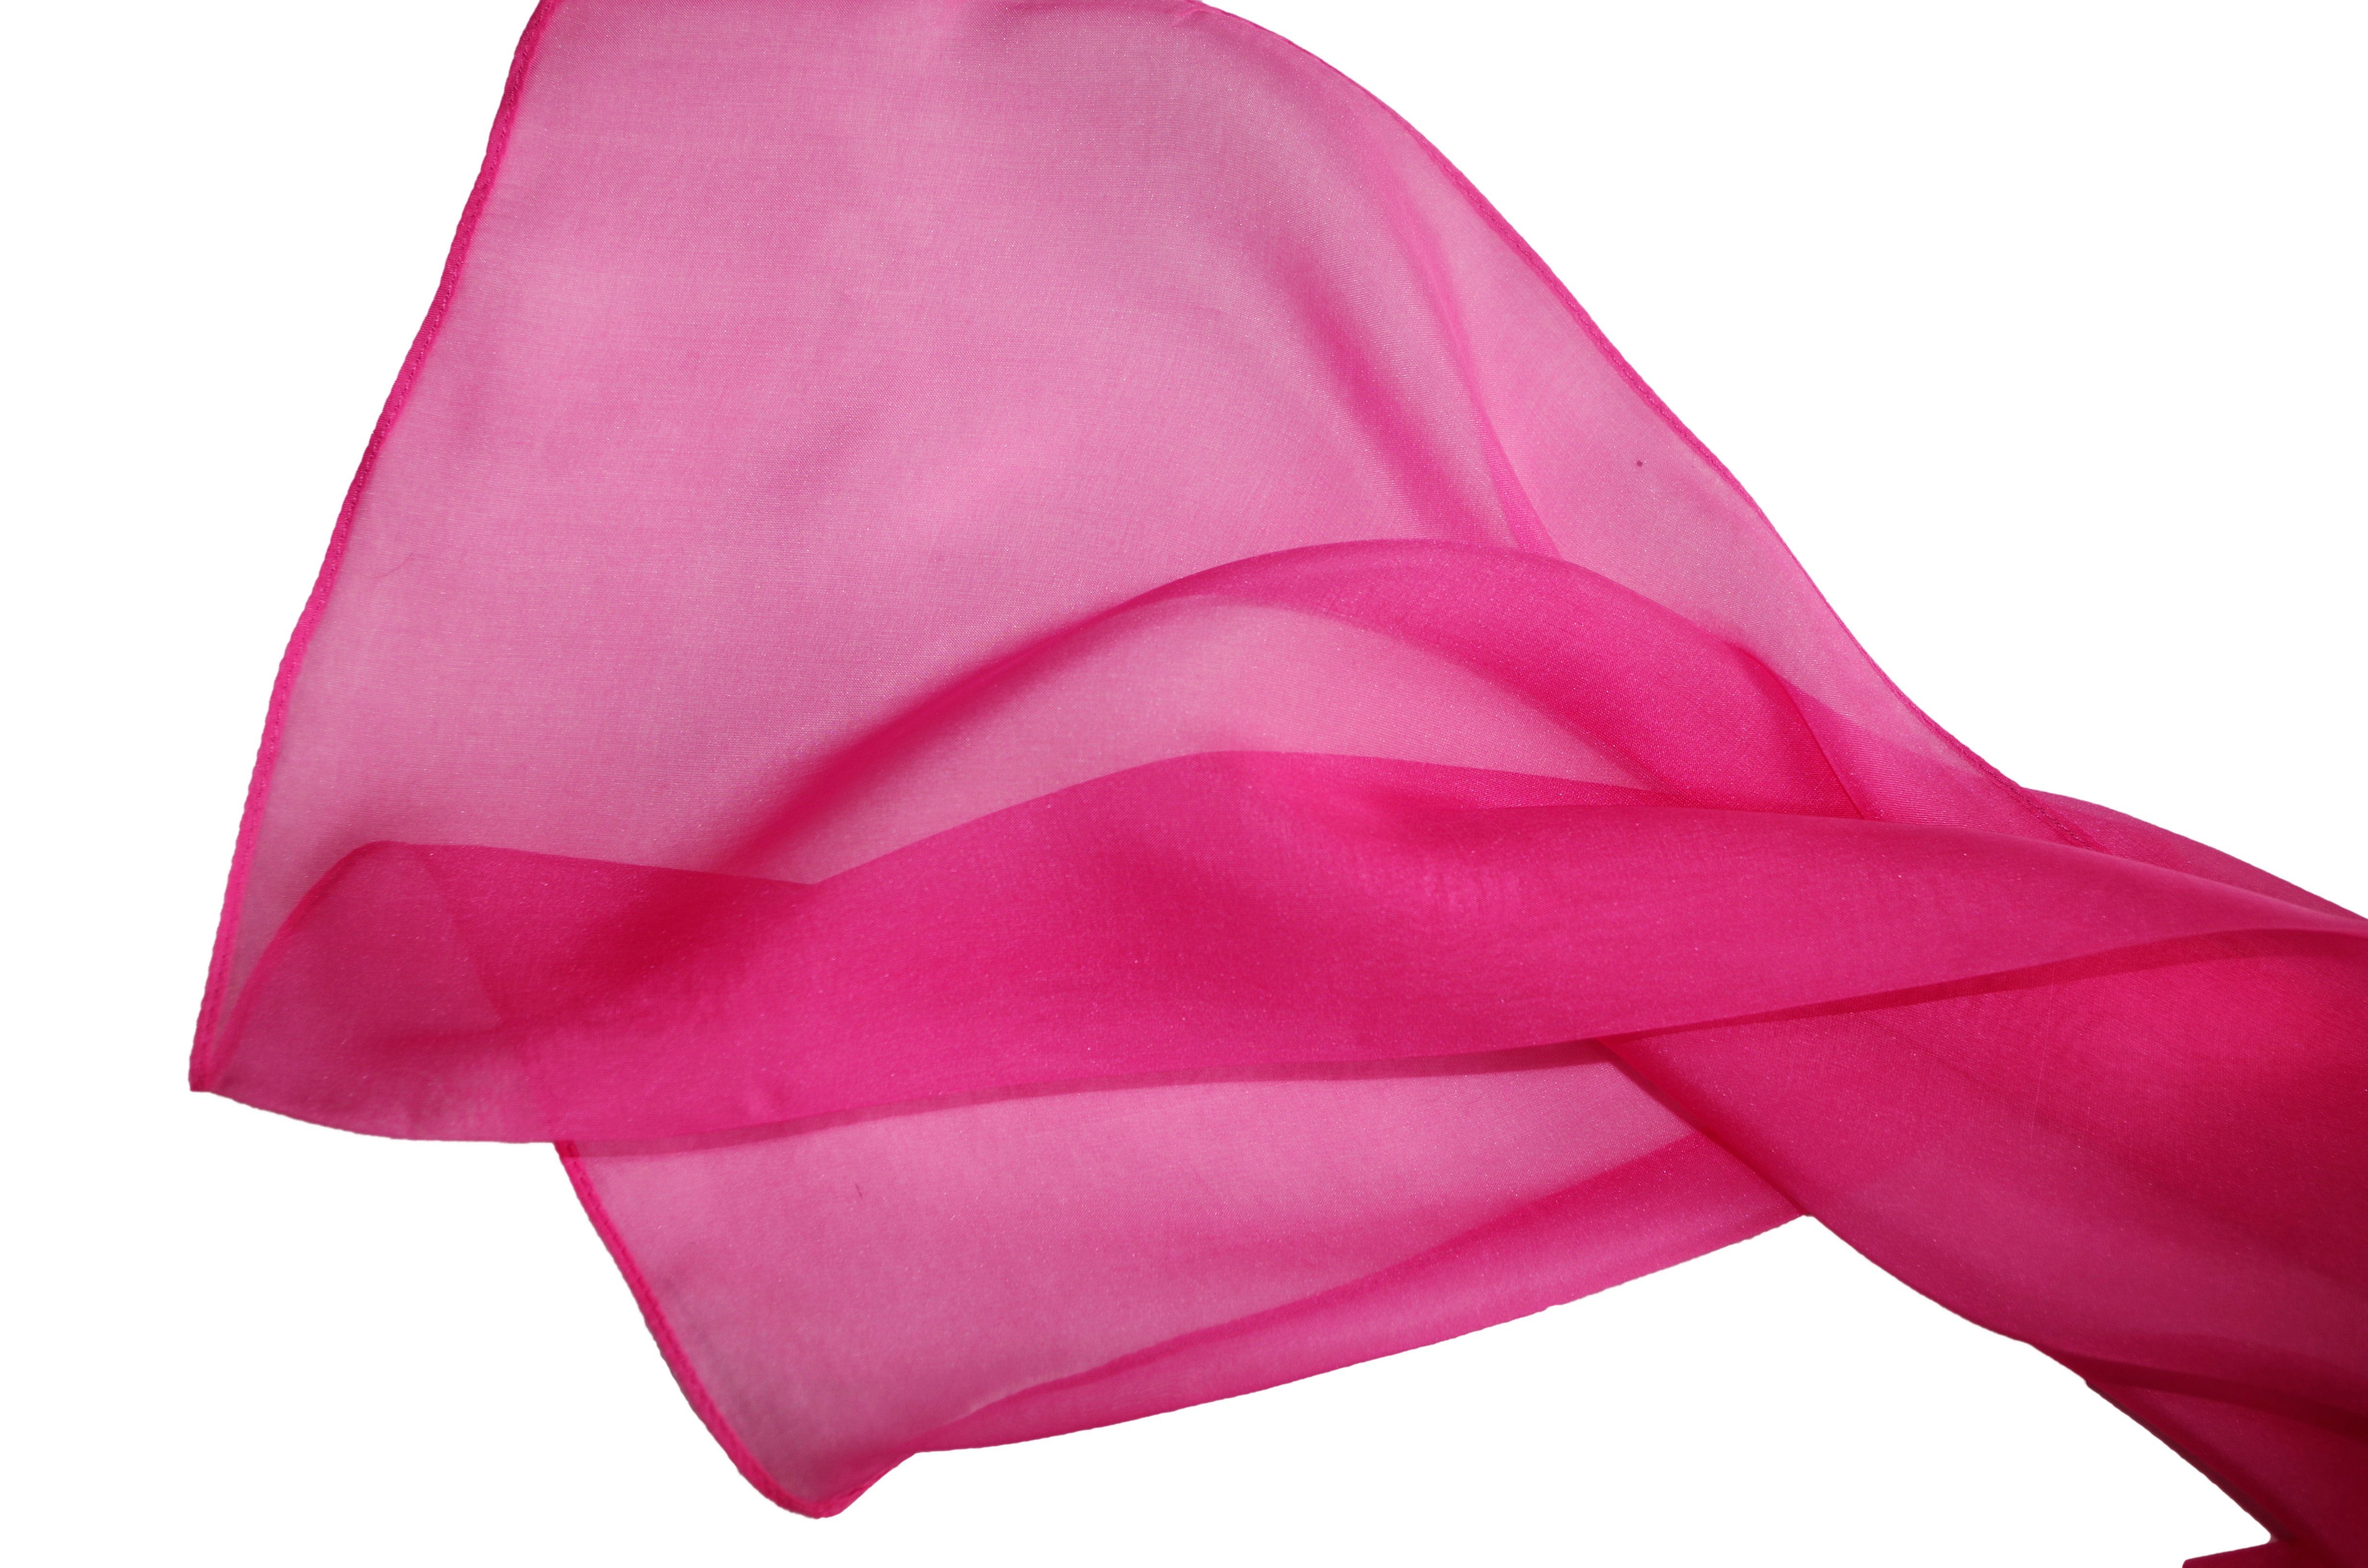 Posh Gear Seidenschal Seiden Schal rosa 100% Scialle, Seide Chiffon aus